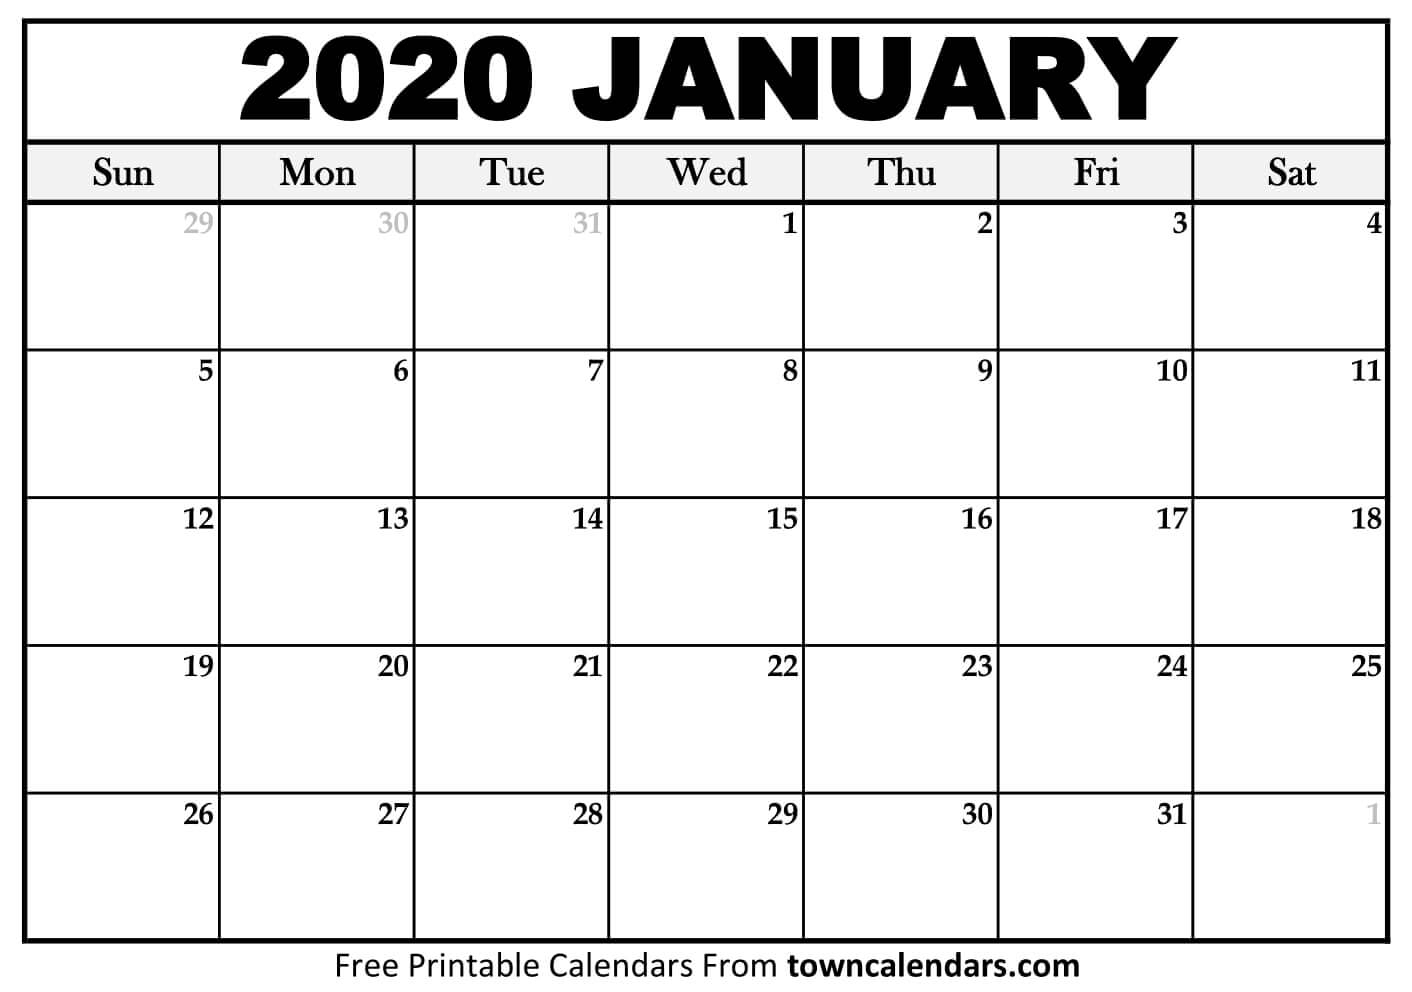 2020 Calendar Printable - Towncalendars